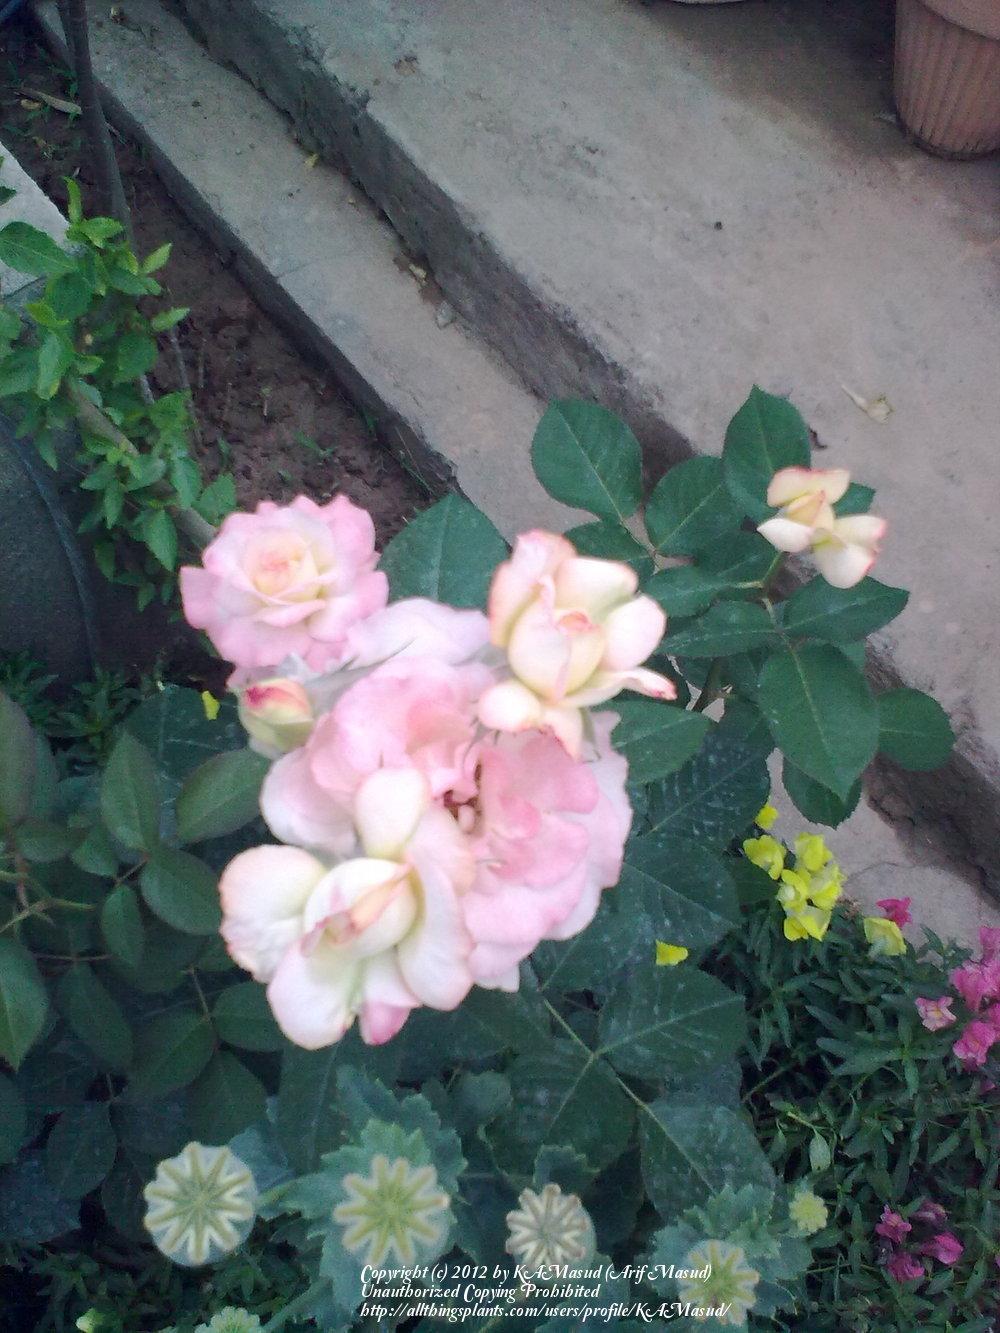 Photo of Roses (Rosa) uploaded by KAMasud